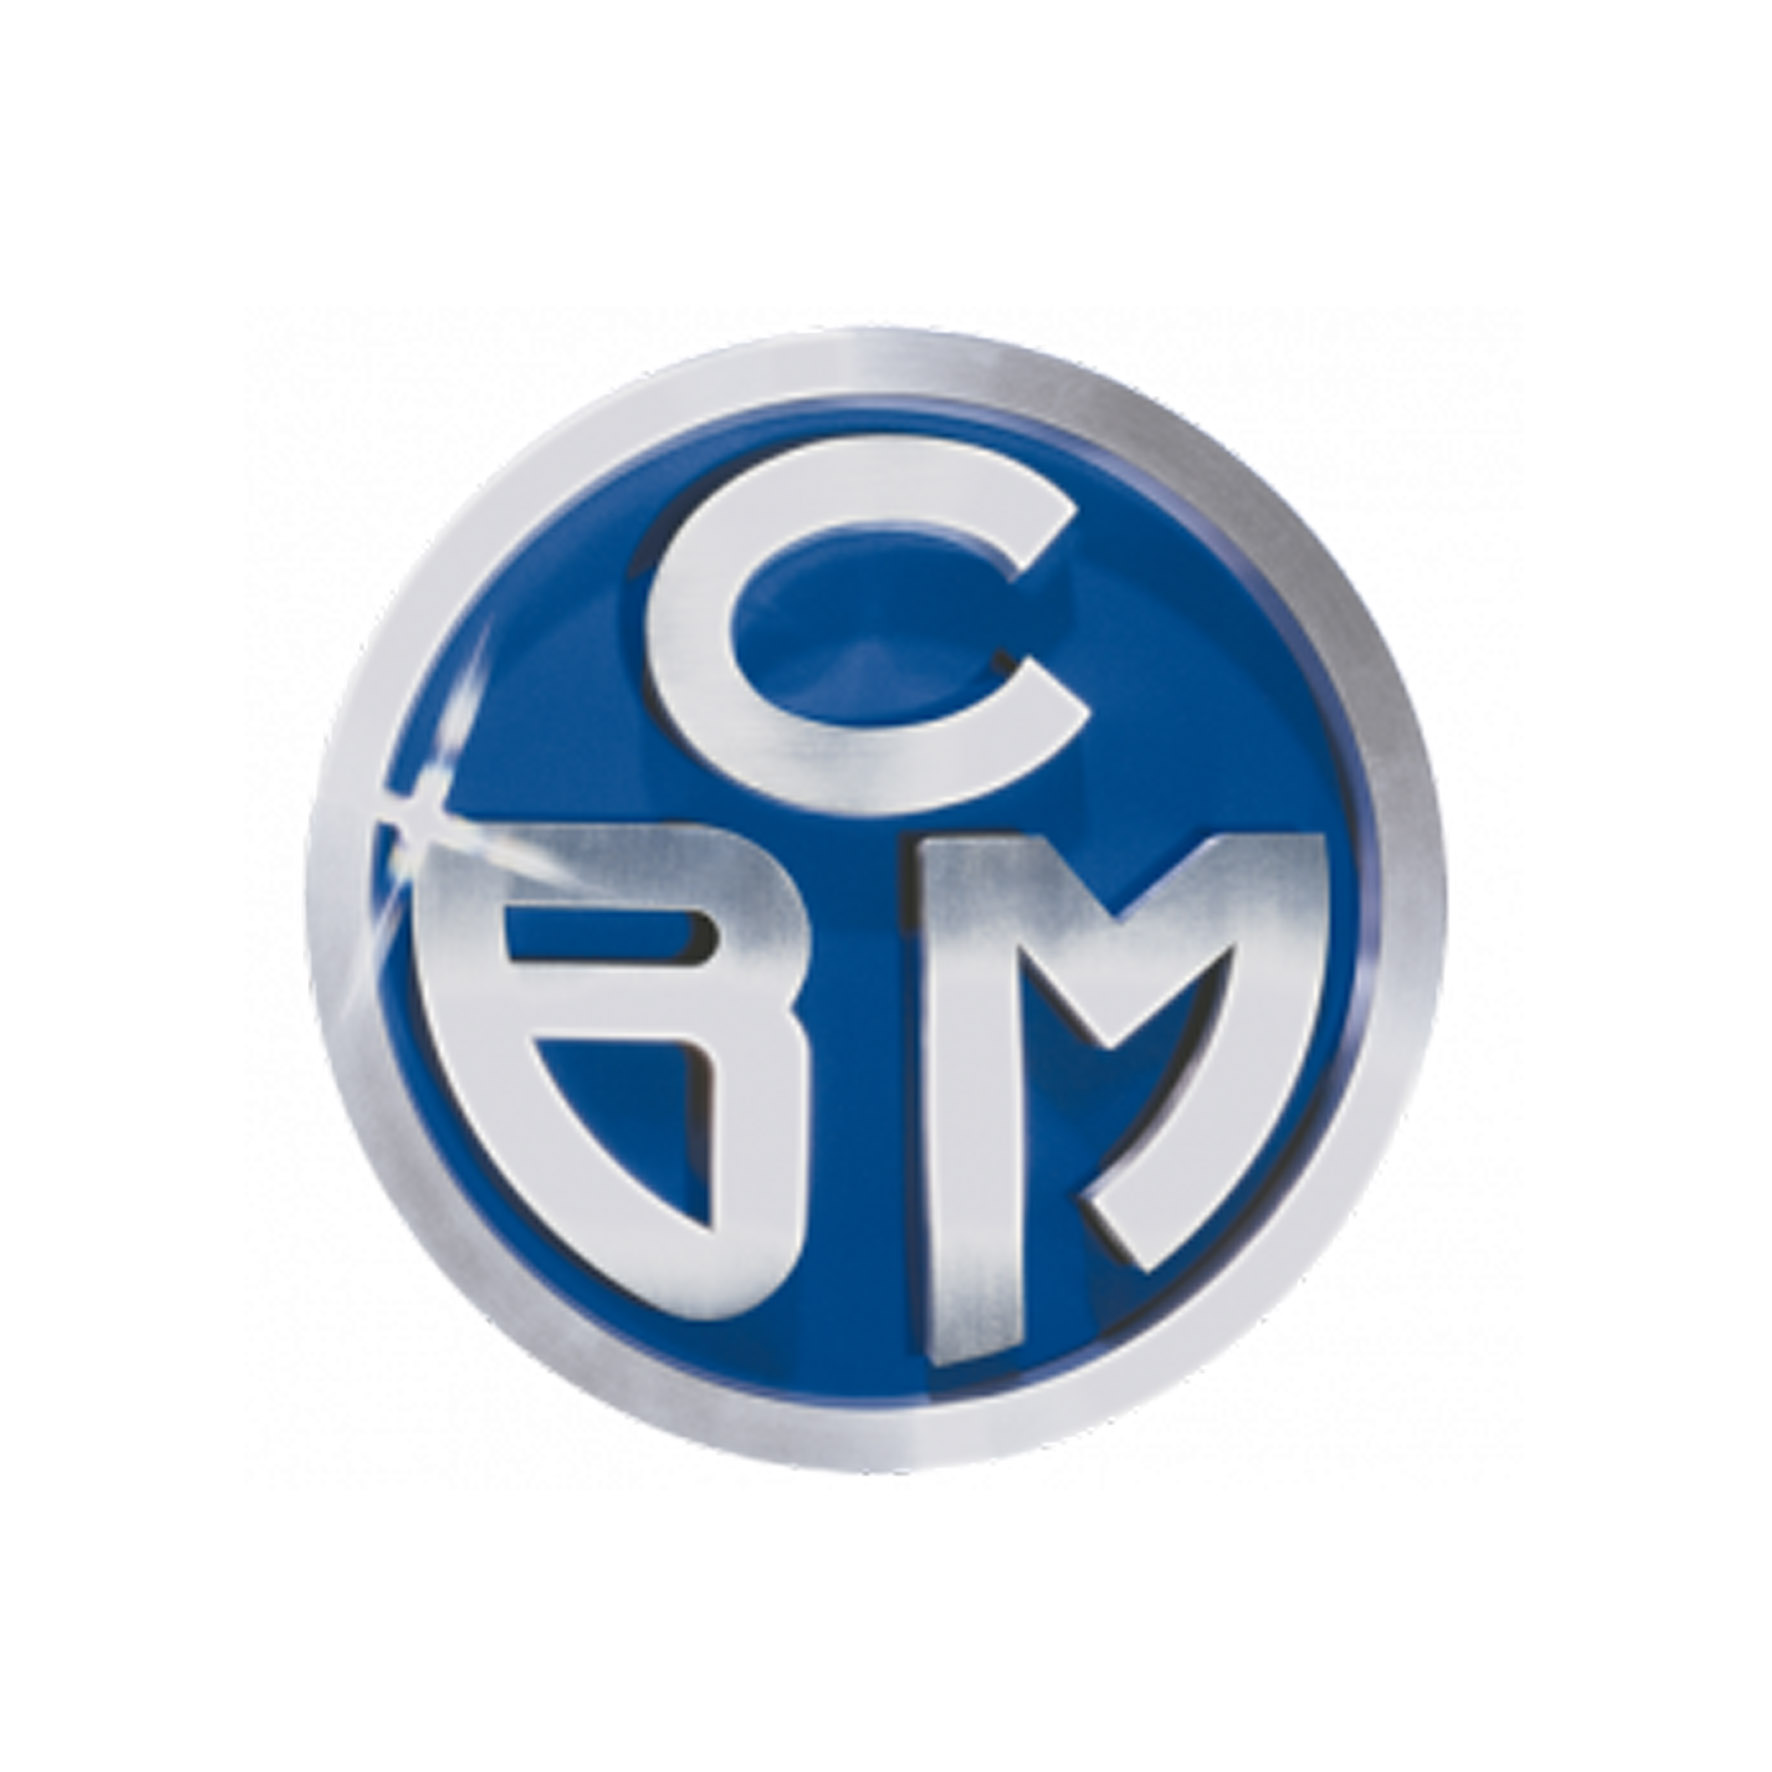 CBM company